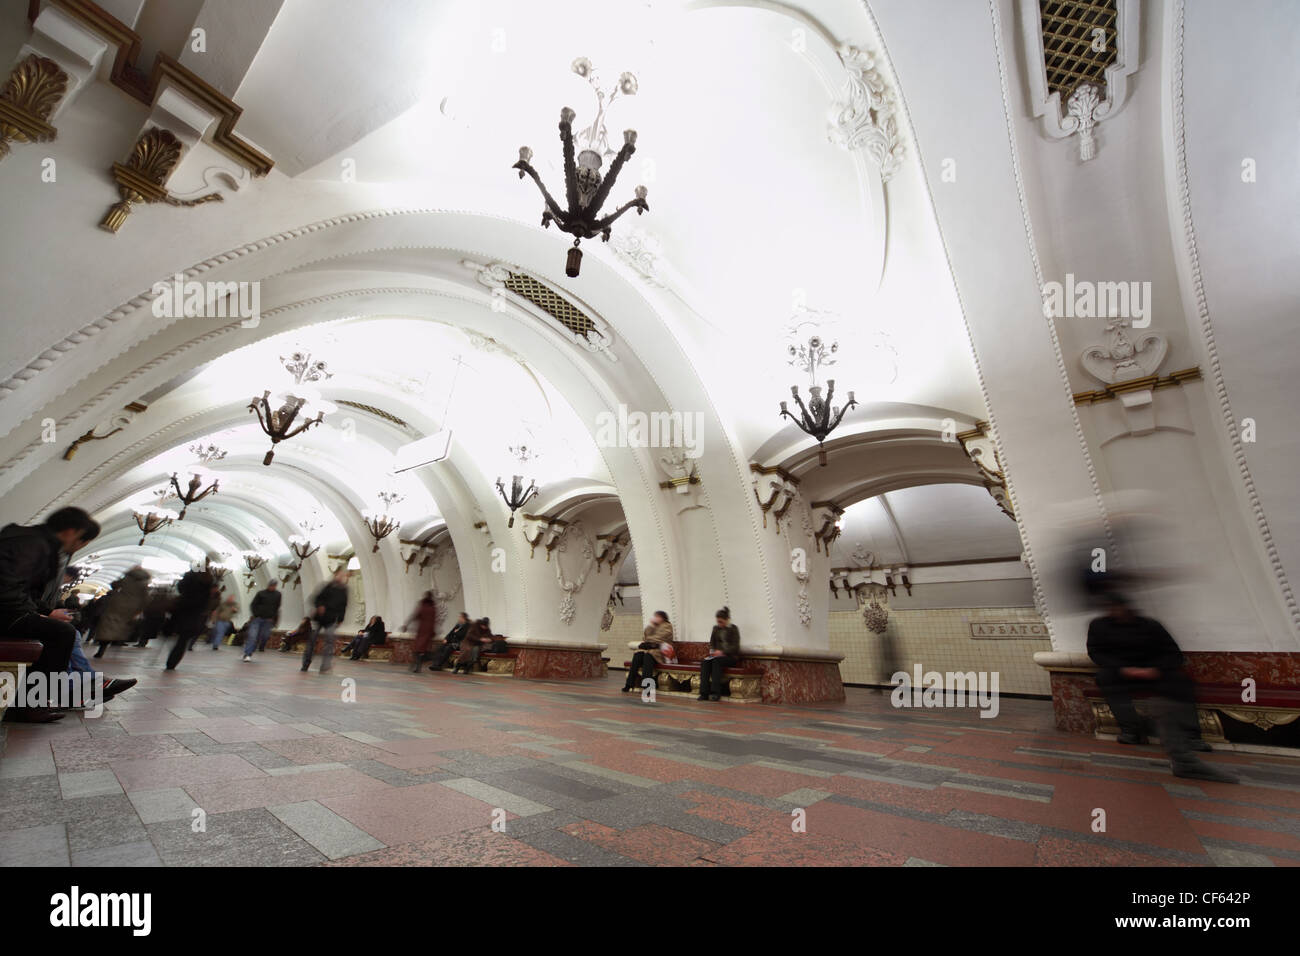 Moskau - Februar 2: nationale Architektur Denkmal - Metrostation Arbatskaja, Seitenansicht, 2. Februar 2010 in Moskau, Russland Stockfoto